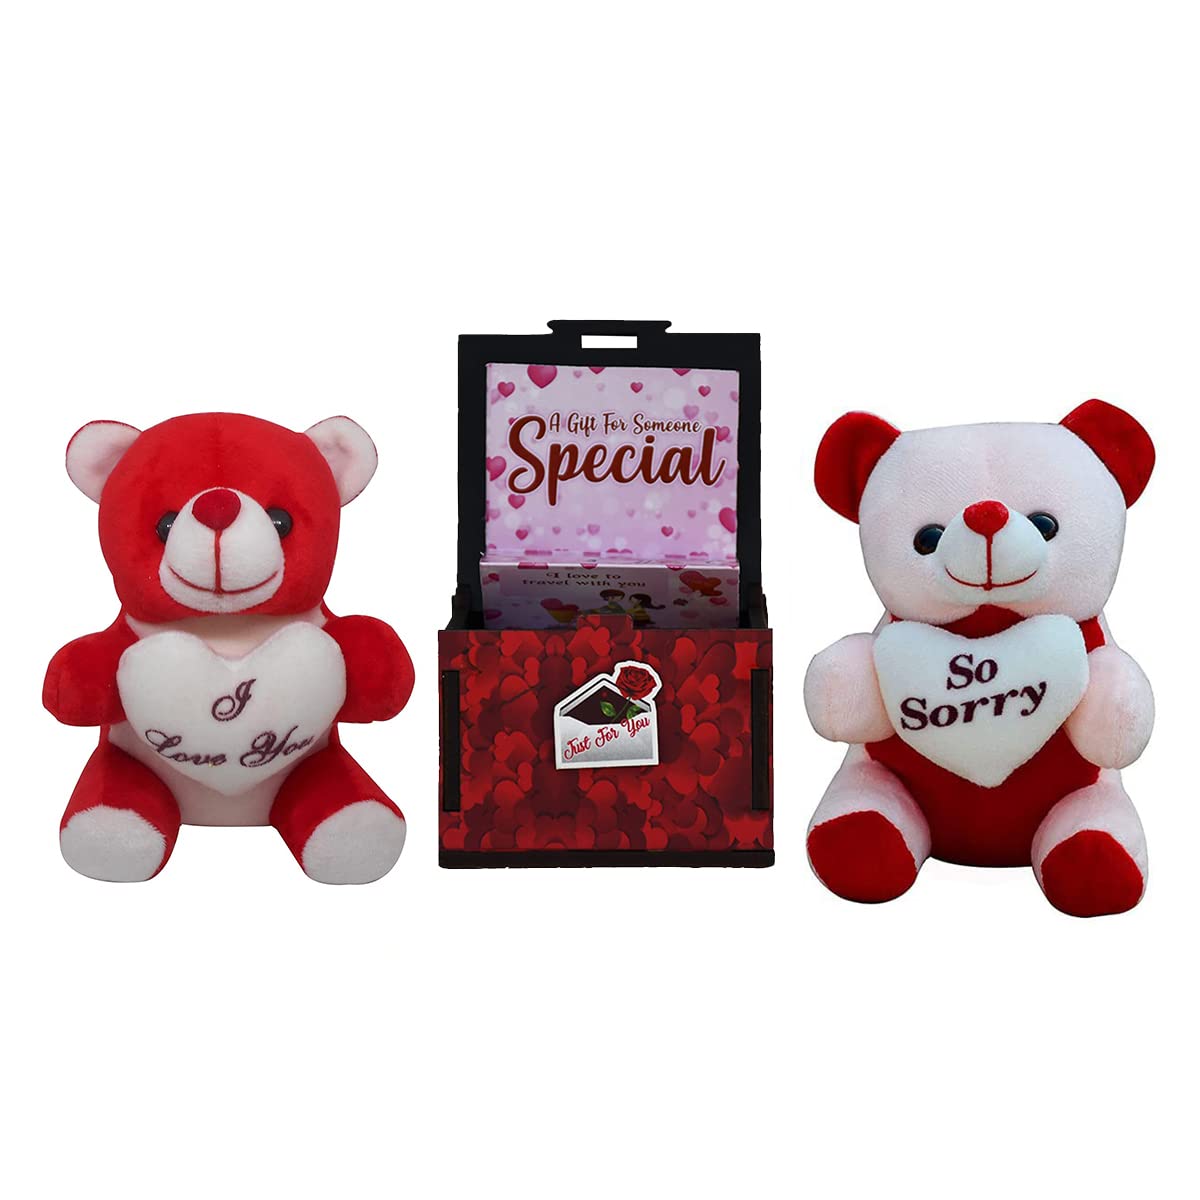 Source Big 200cm American Giant Bear Teddy Bear /Stuffed Plush bear Toys  For Girlfriend Birthday Gift Valentine's Day/giant bear toy on m.alibaba.com